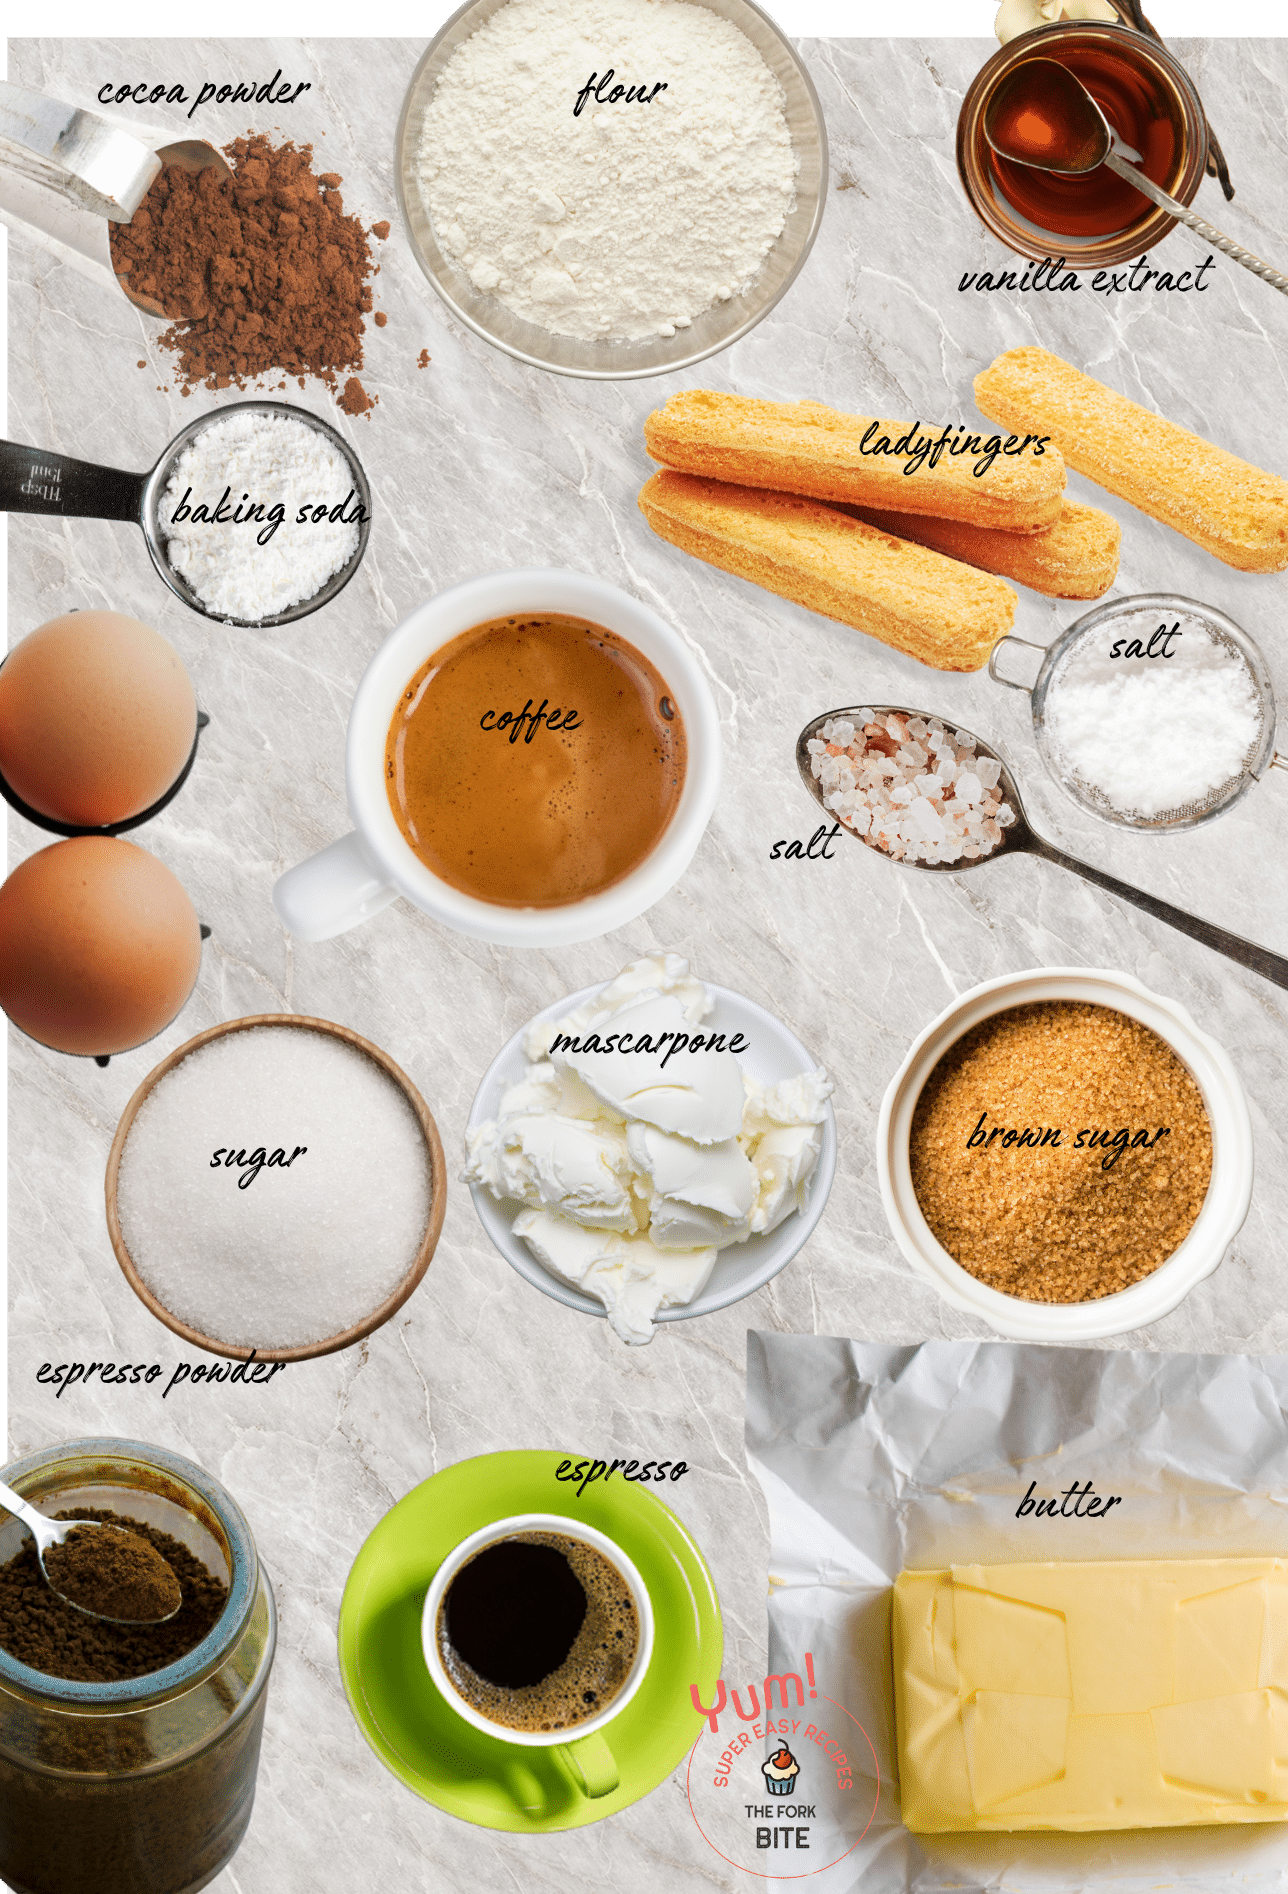 Tiramisu Cupcakes Ingredients featuring mascarpone cheese, cocoa powder, robust espresso, and organic eggs.